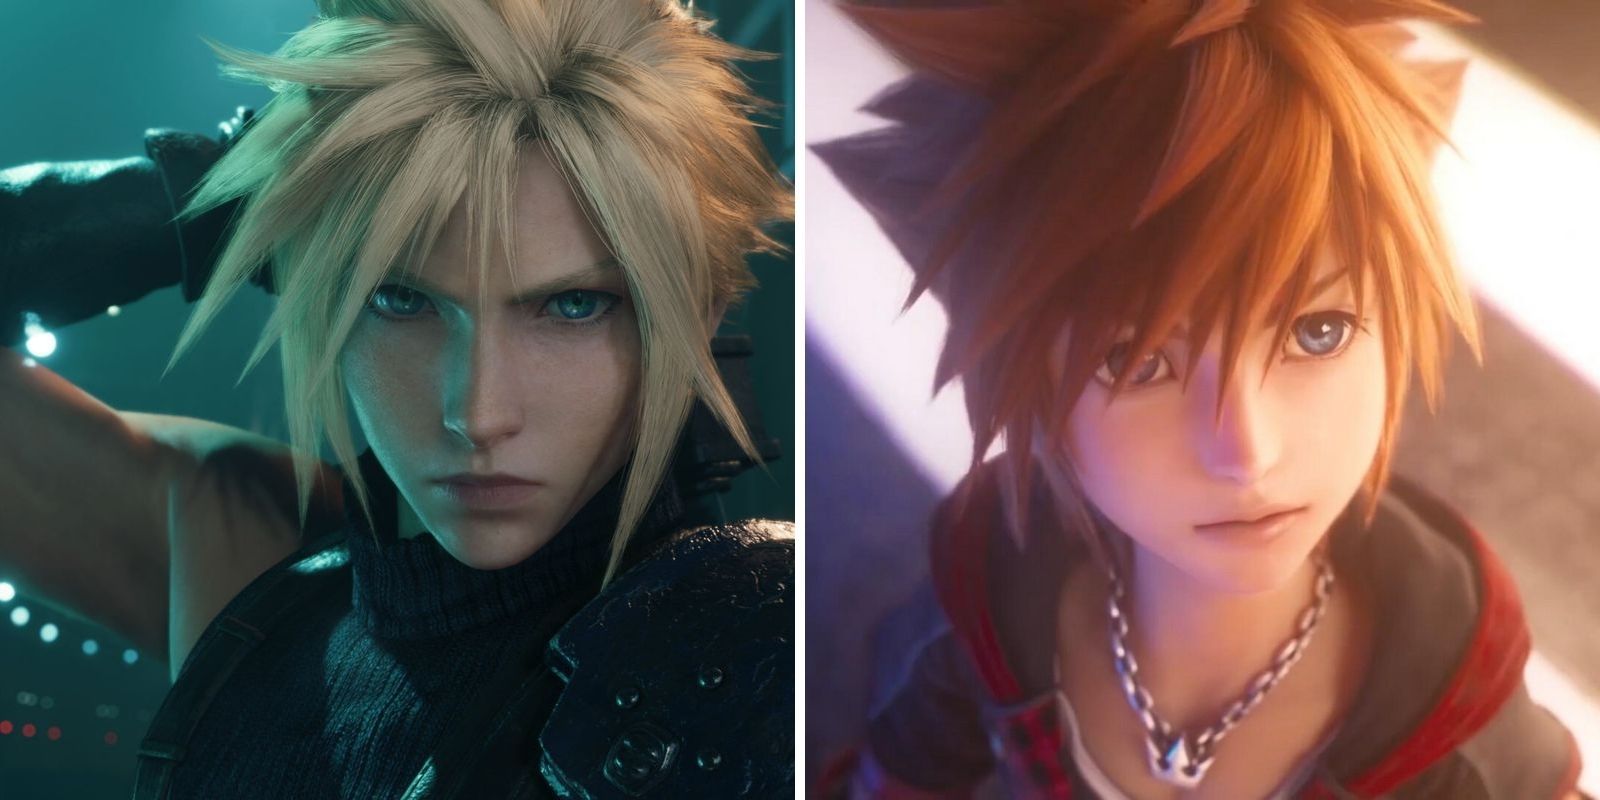 FF7 Remake Cloud next to Kingdom Hearts 3 Sora